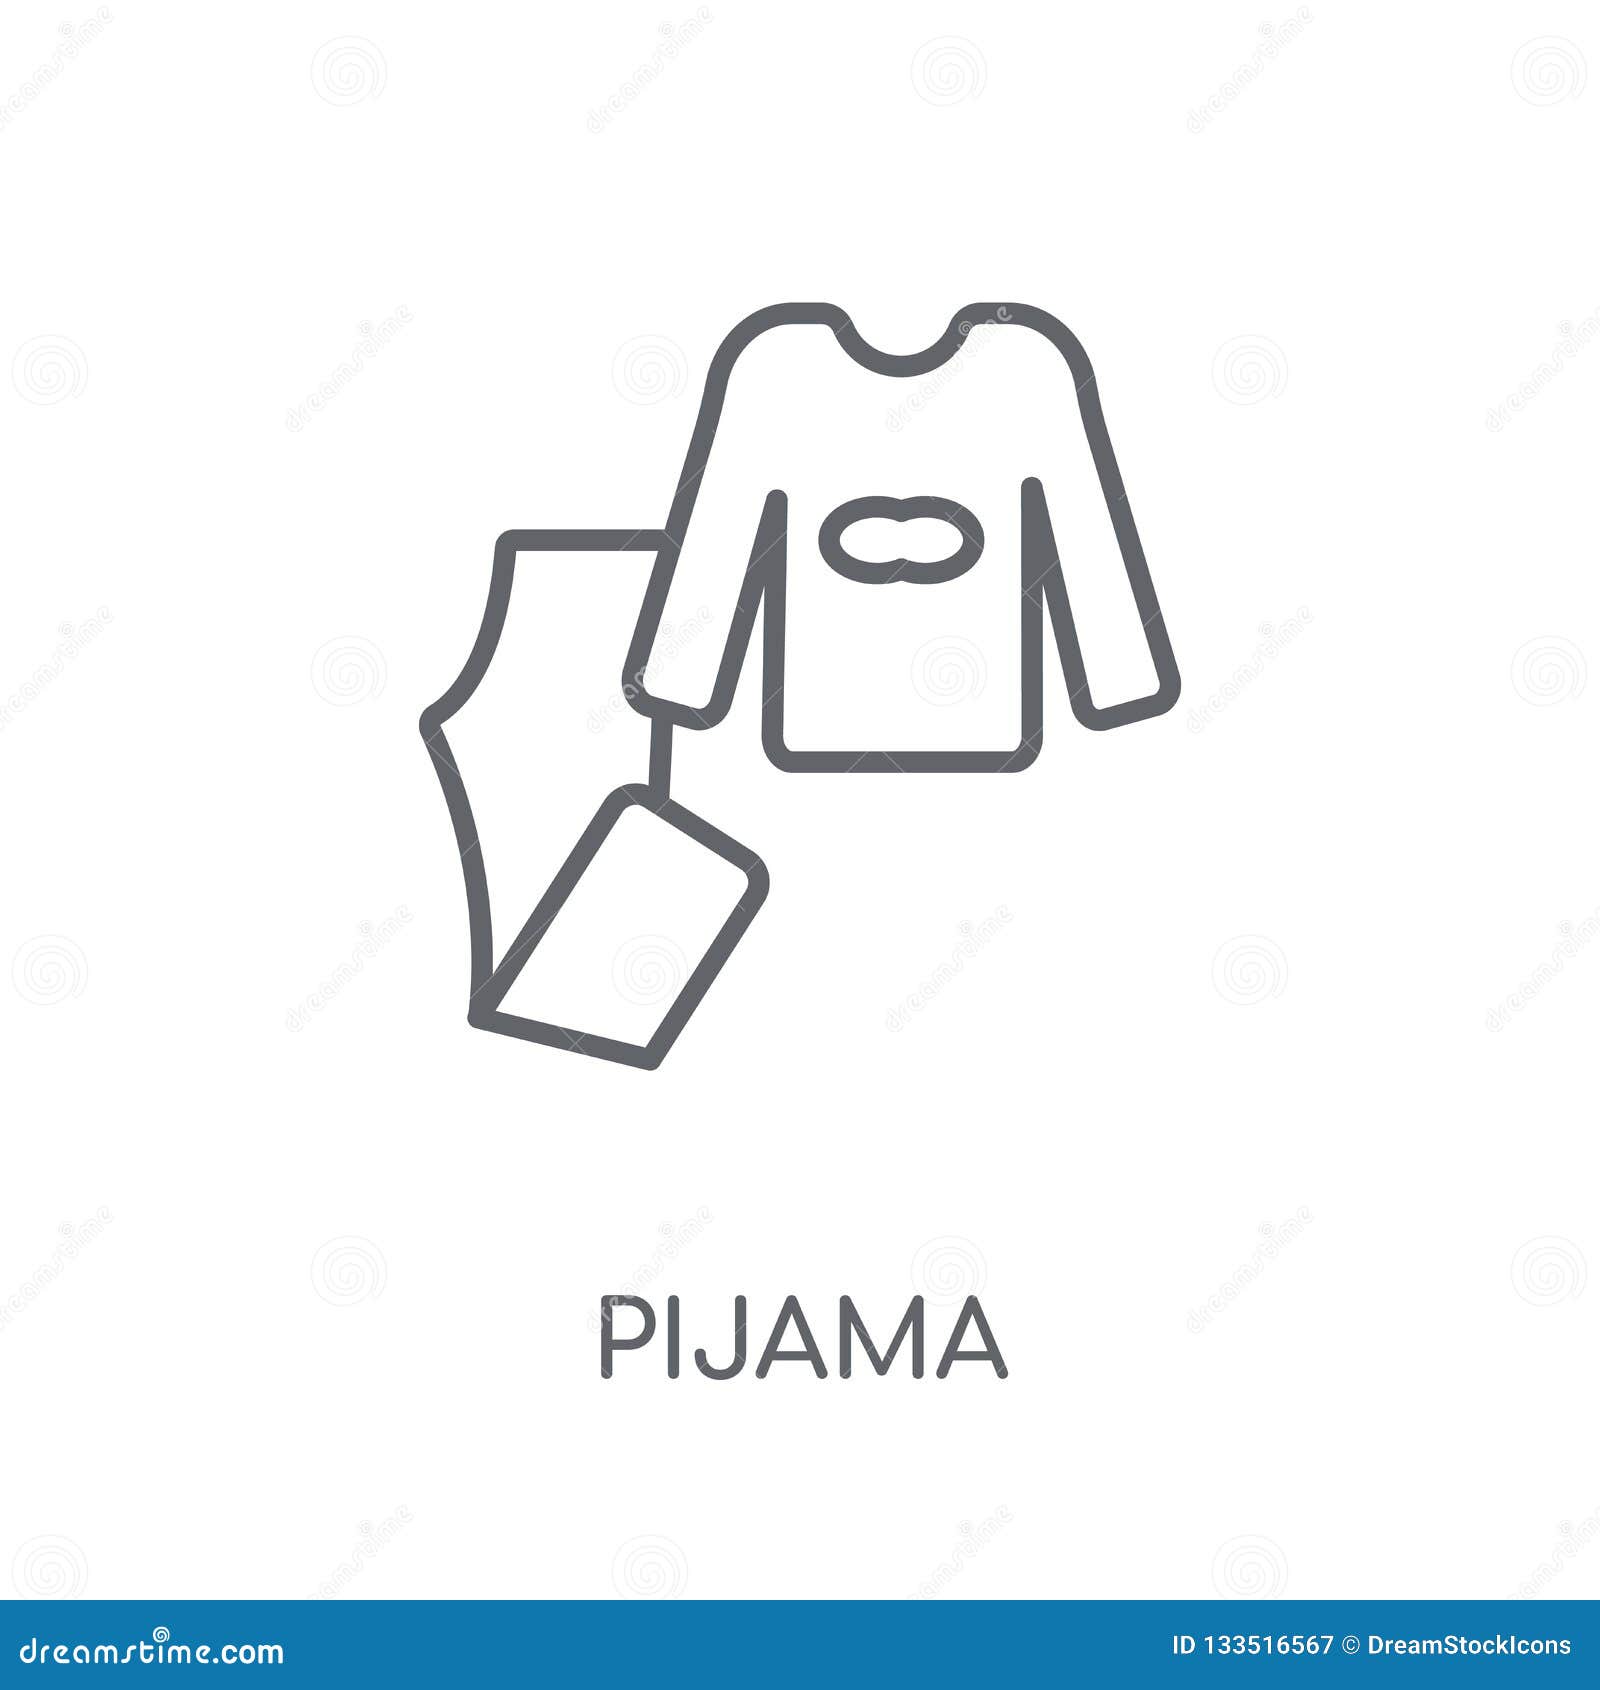 pijama linear icon. modern outline pijama logo concept on white